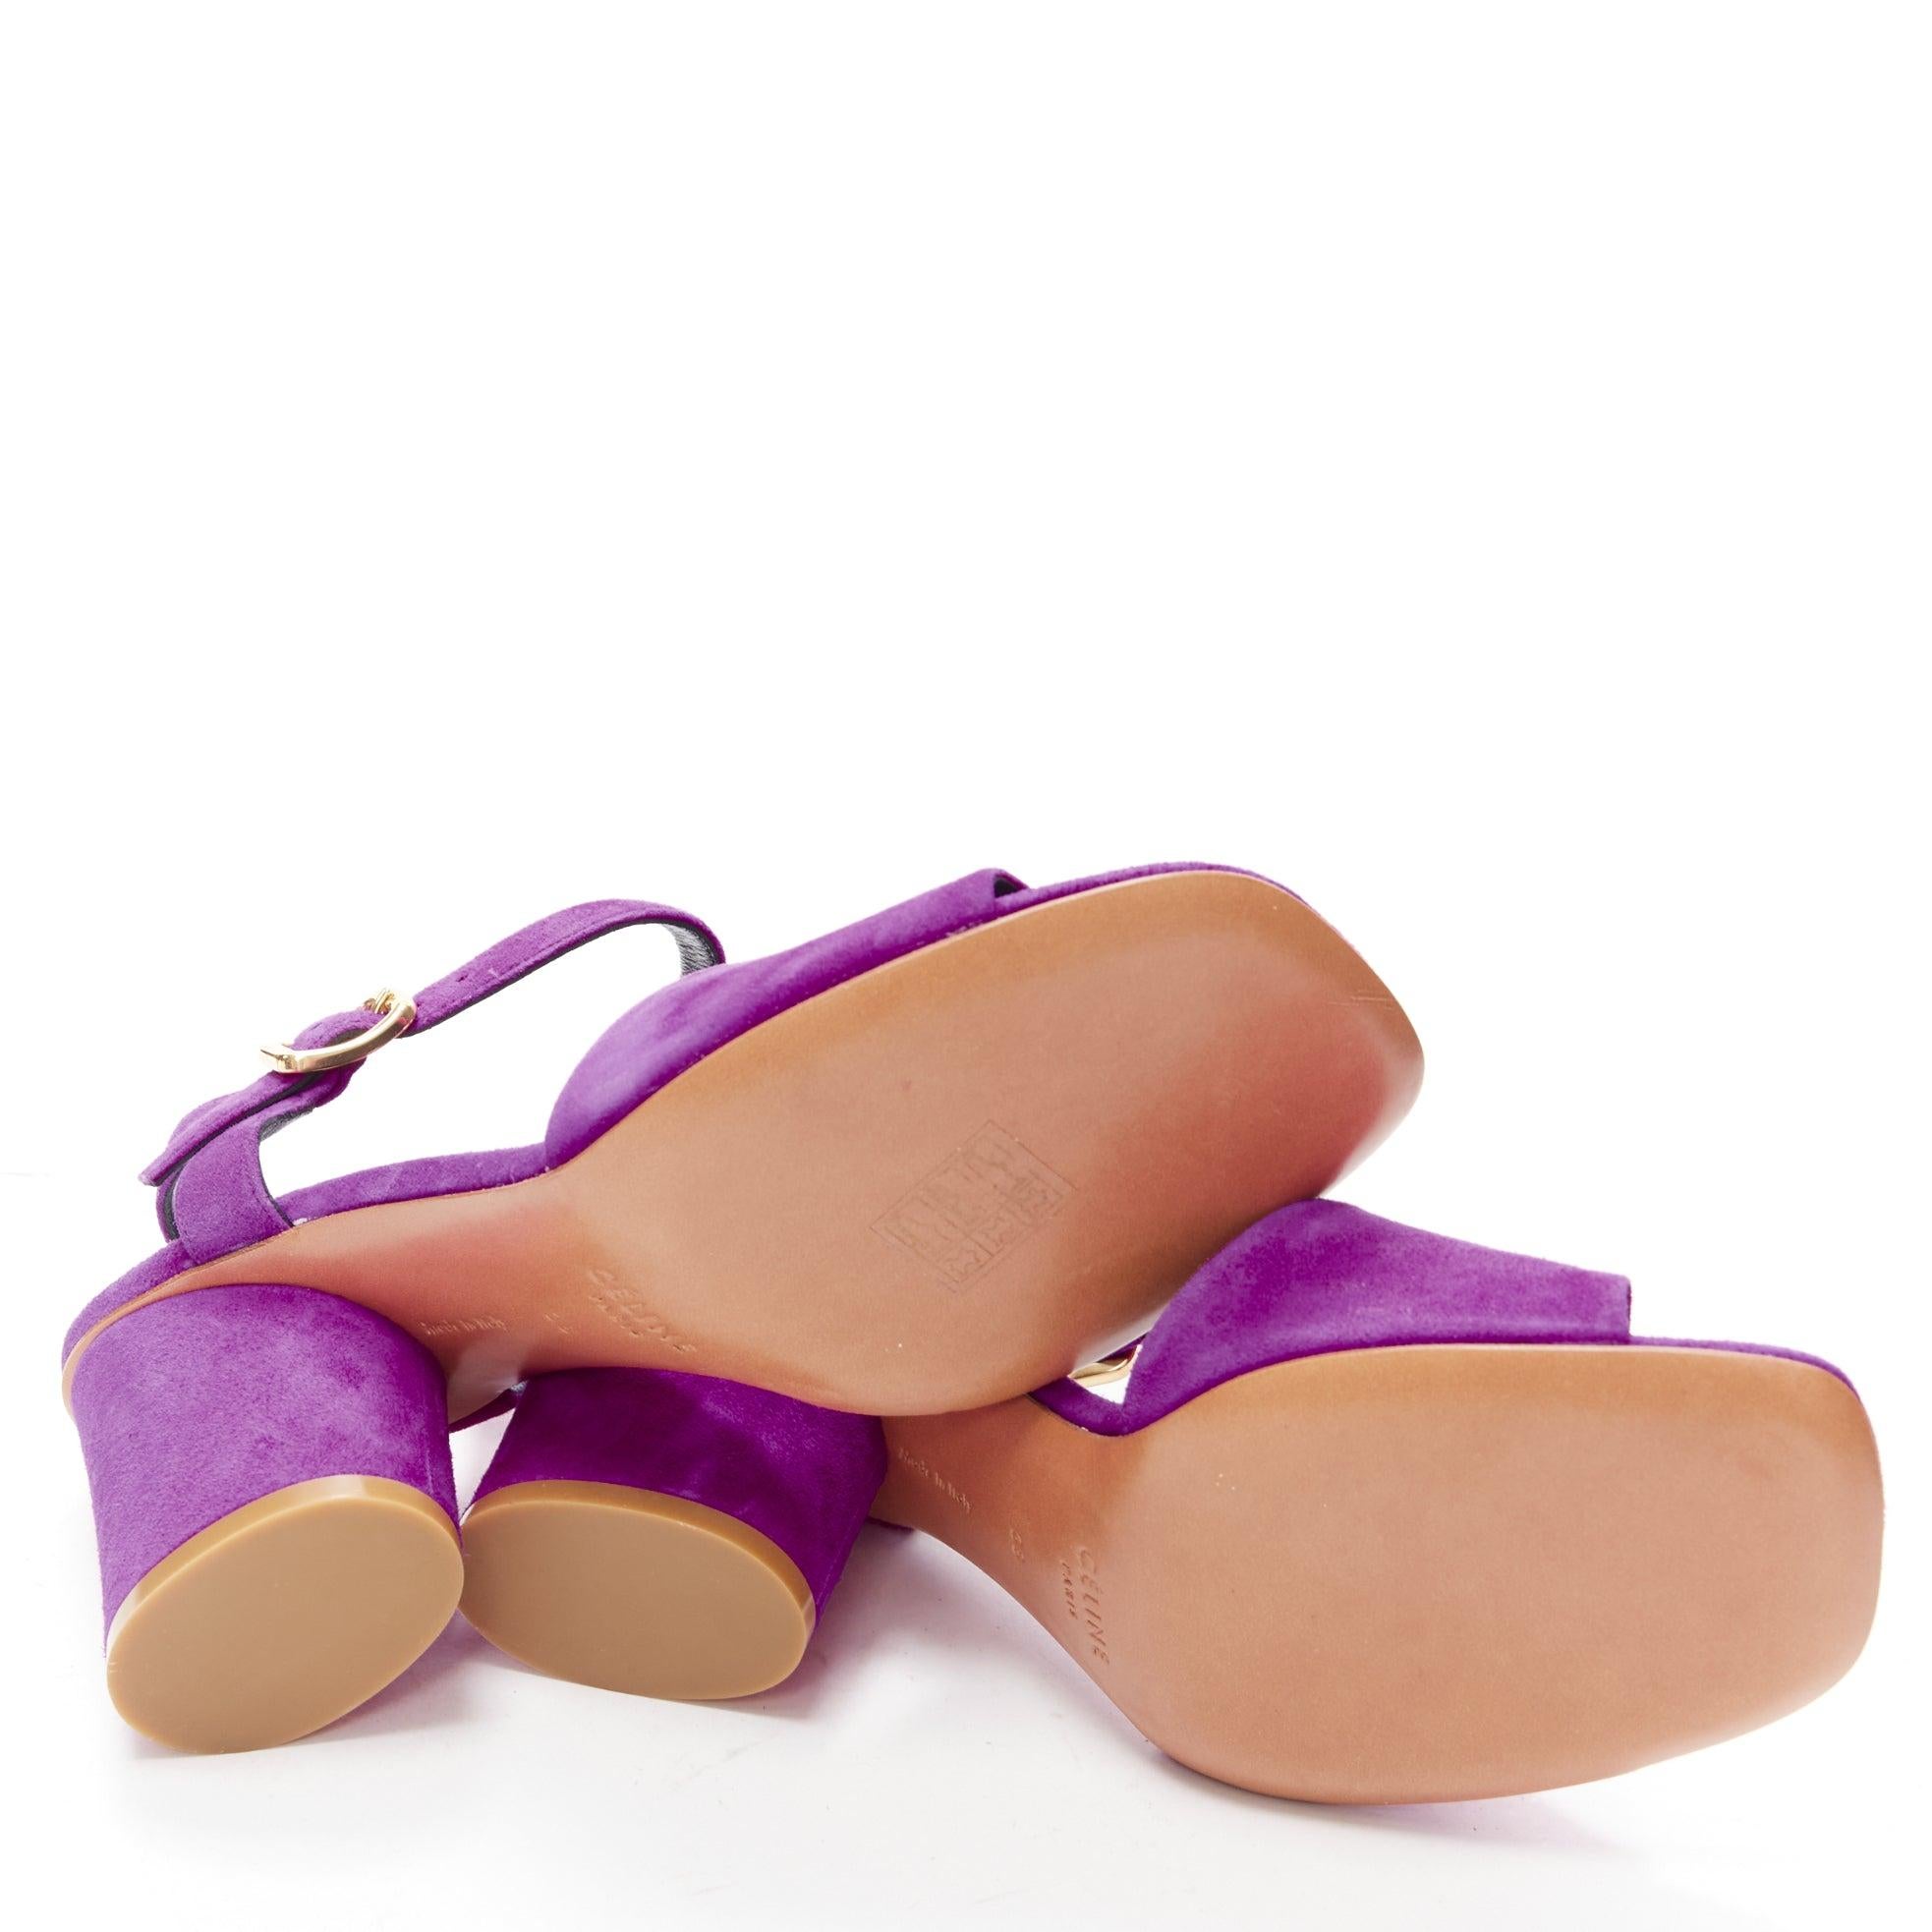 OLD CELINE Phoebe Philo purple suede gold buckle strappy sandal heels EU38 6